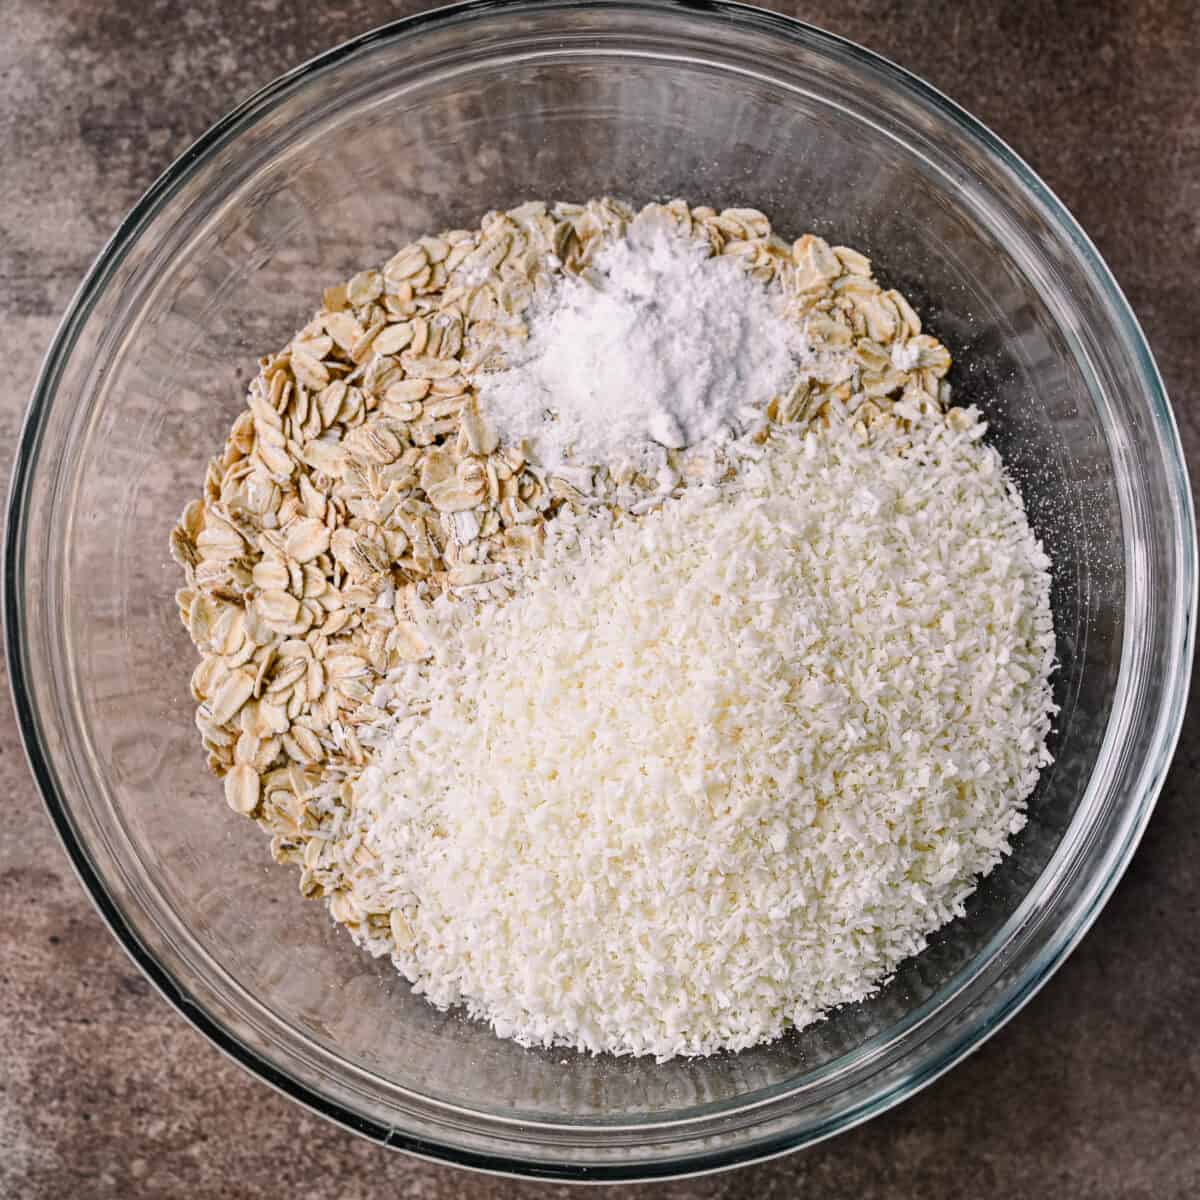 dry ingredients for vegan gluten-free cookies in a bowl